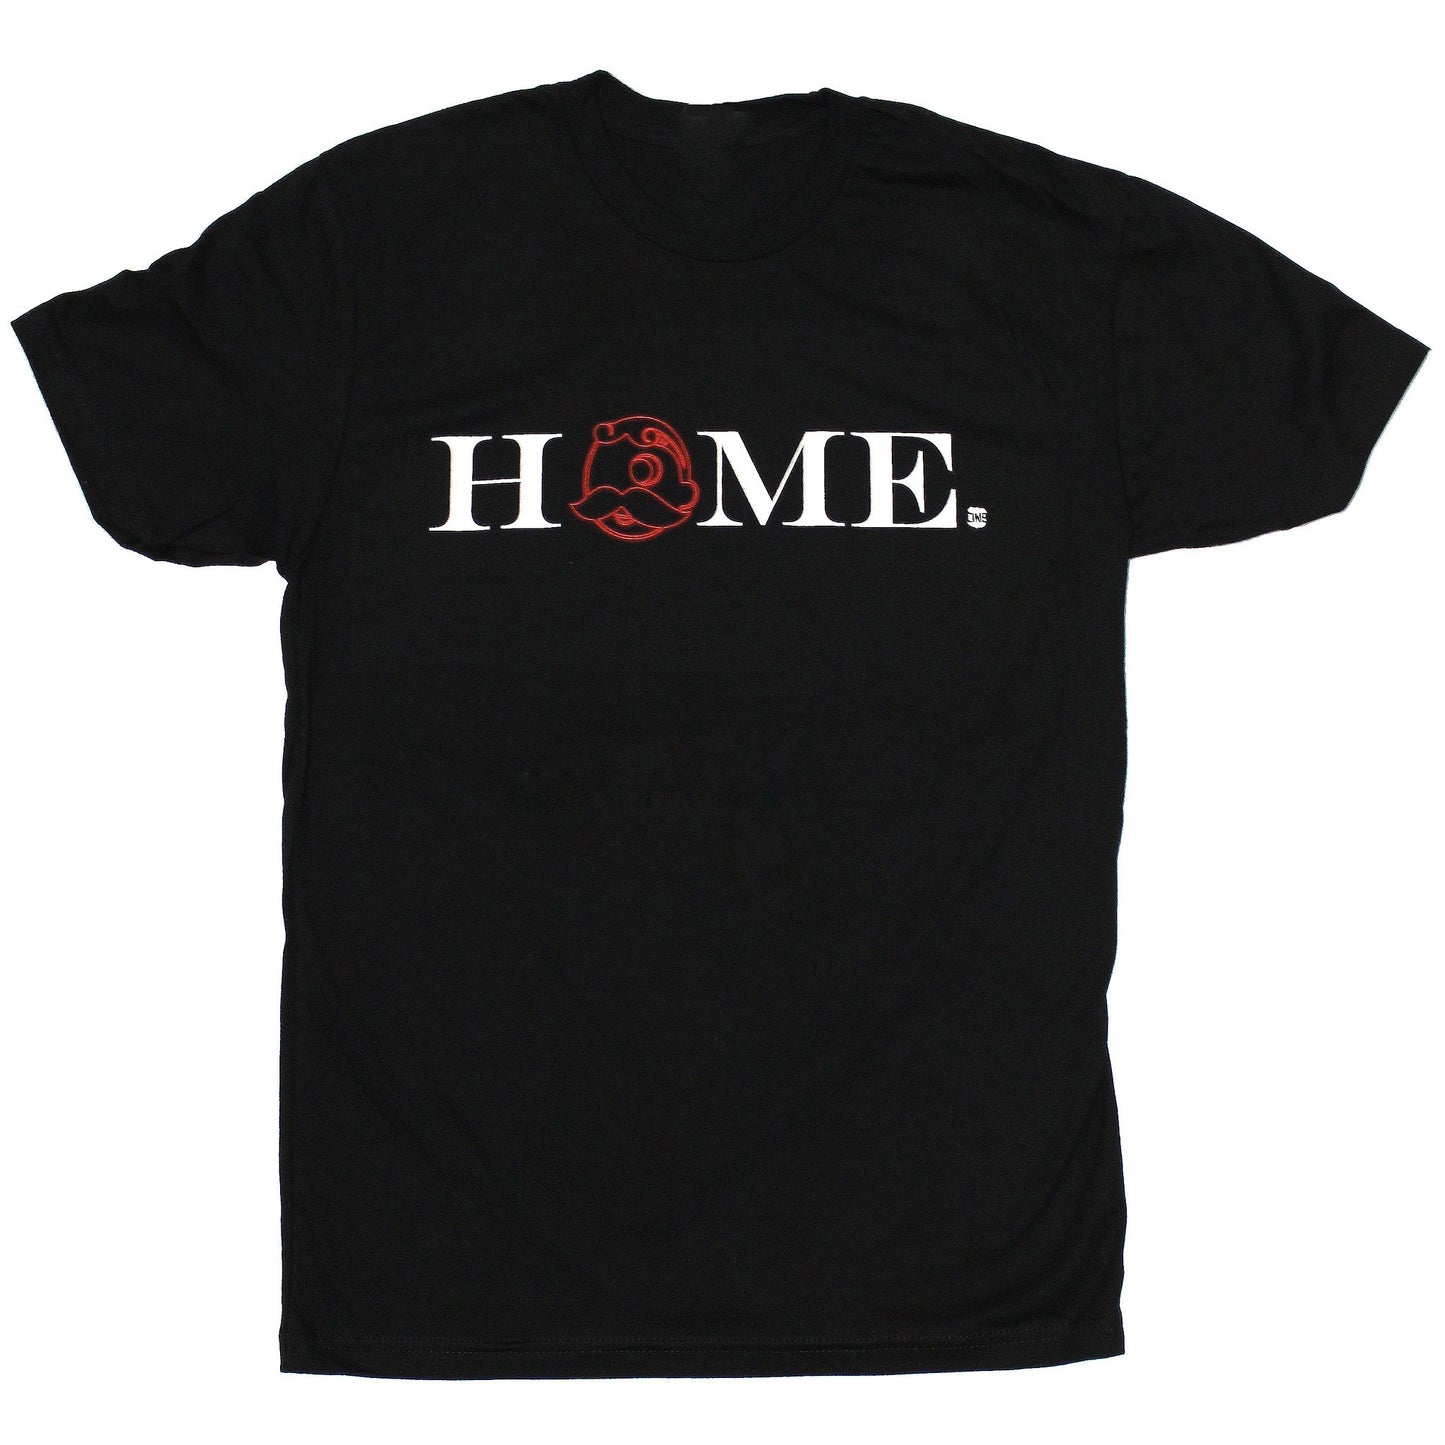 Boh Home (Black) / Shirt - Route One Apparel